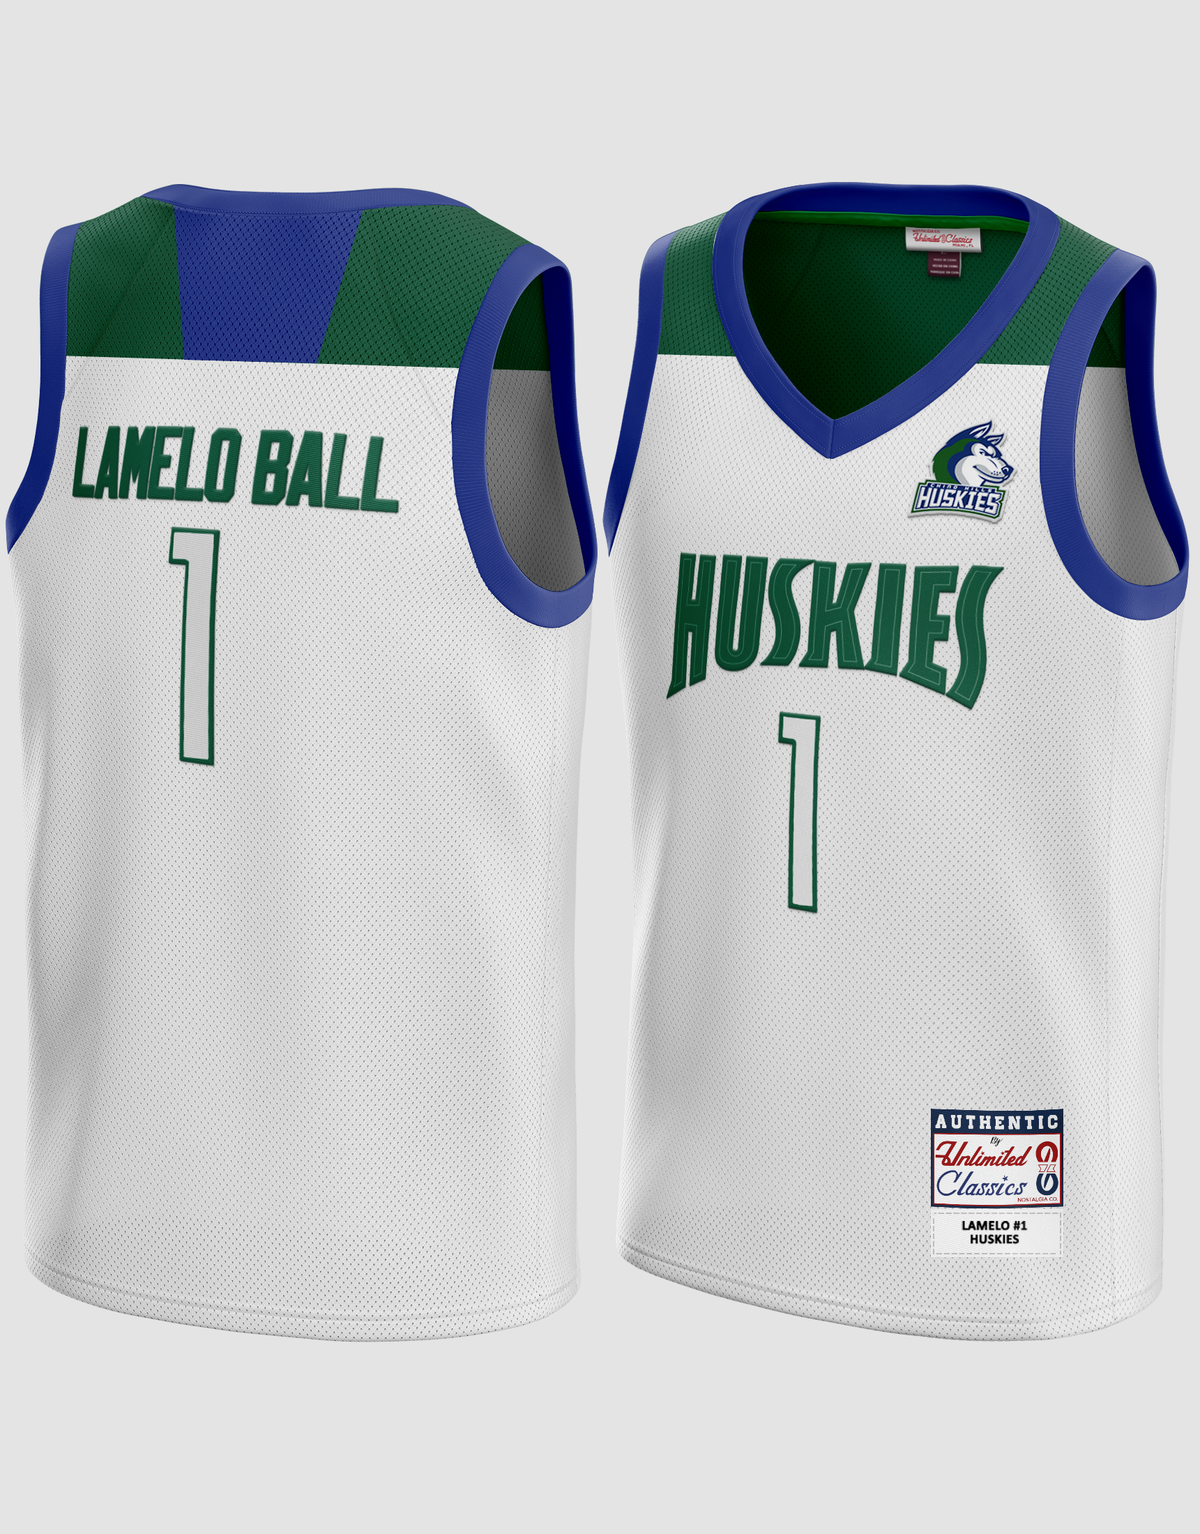 LaMelo Ball 1 Chino Hills Huskies White Basketball Jersey 2 — BORIZ